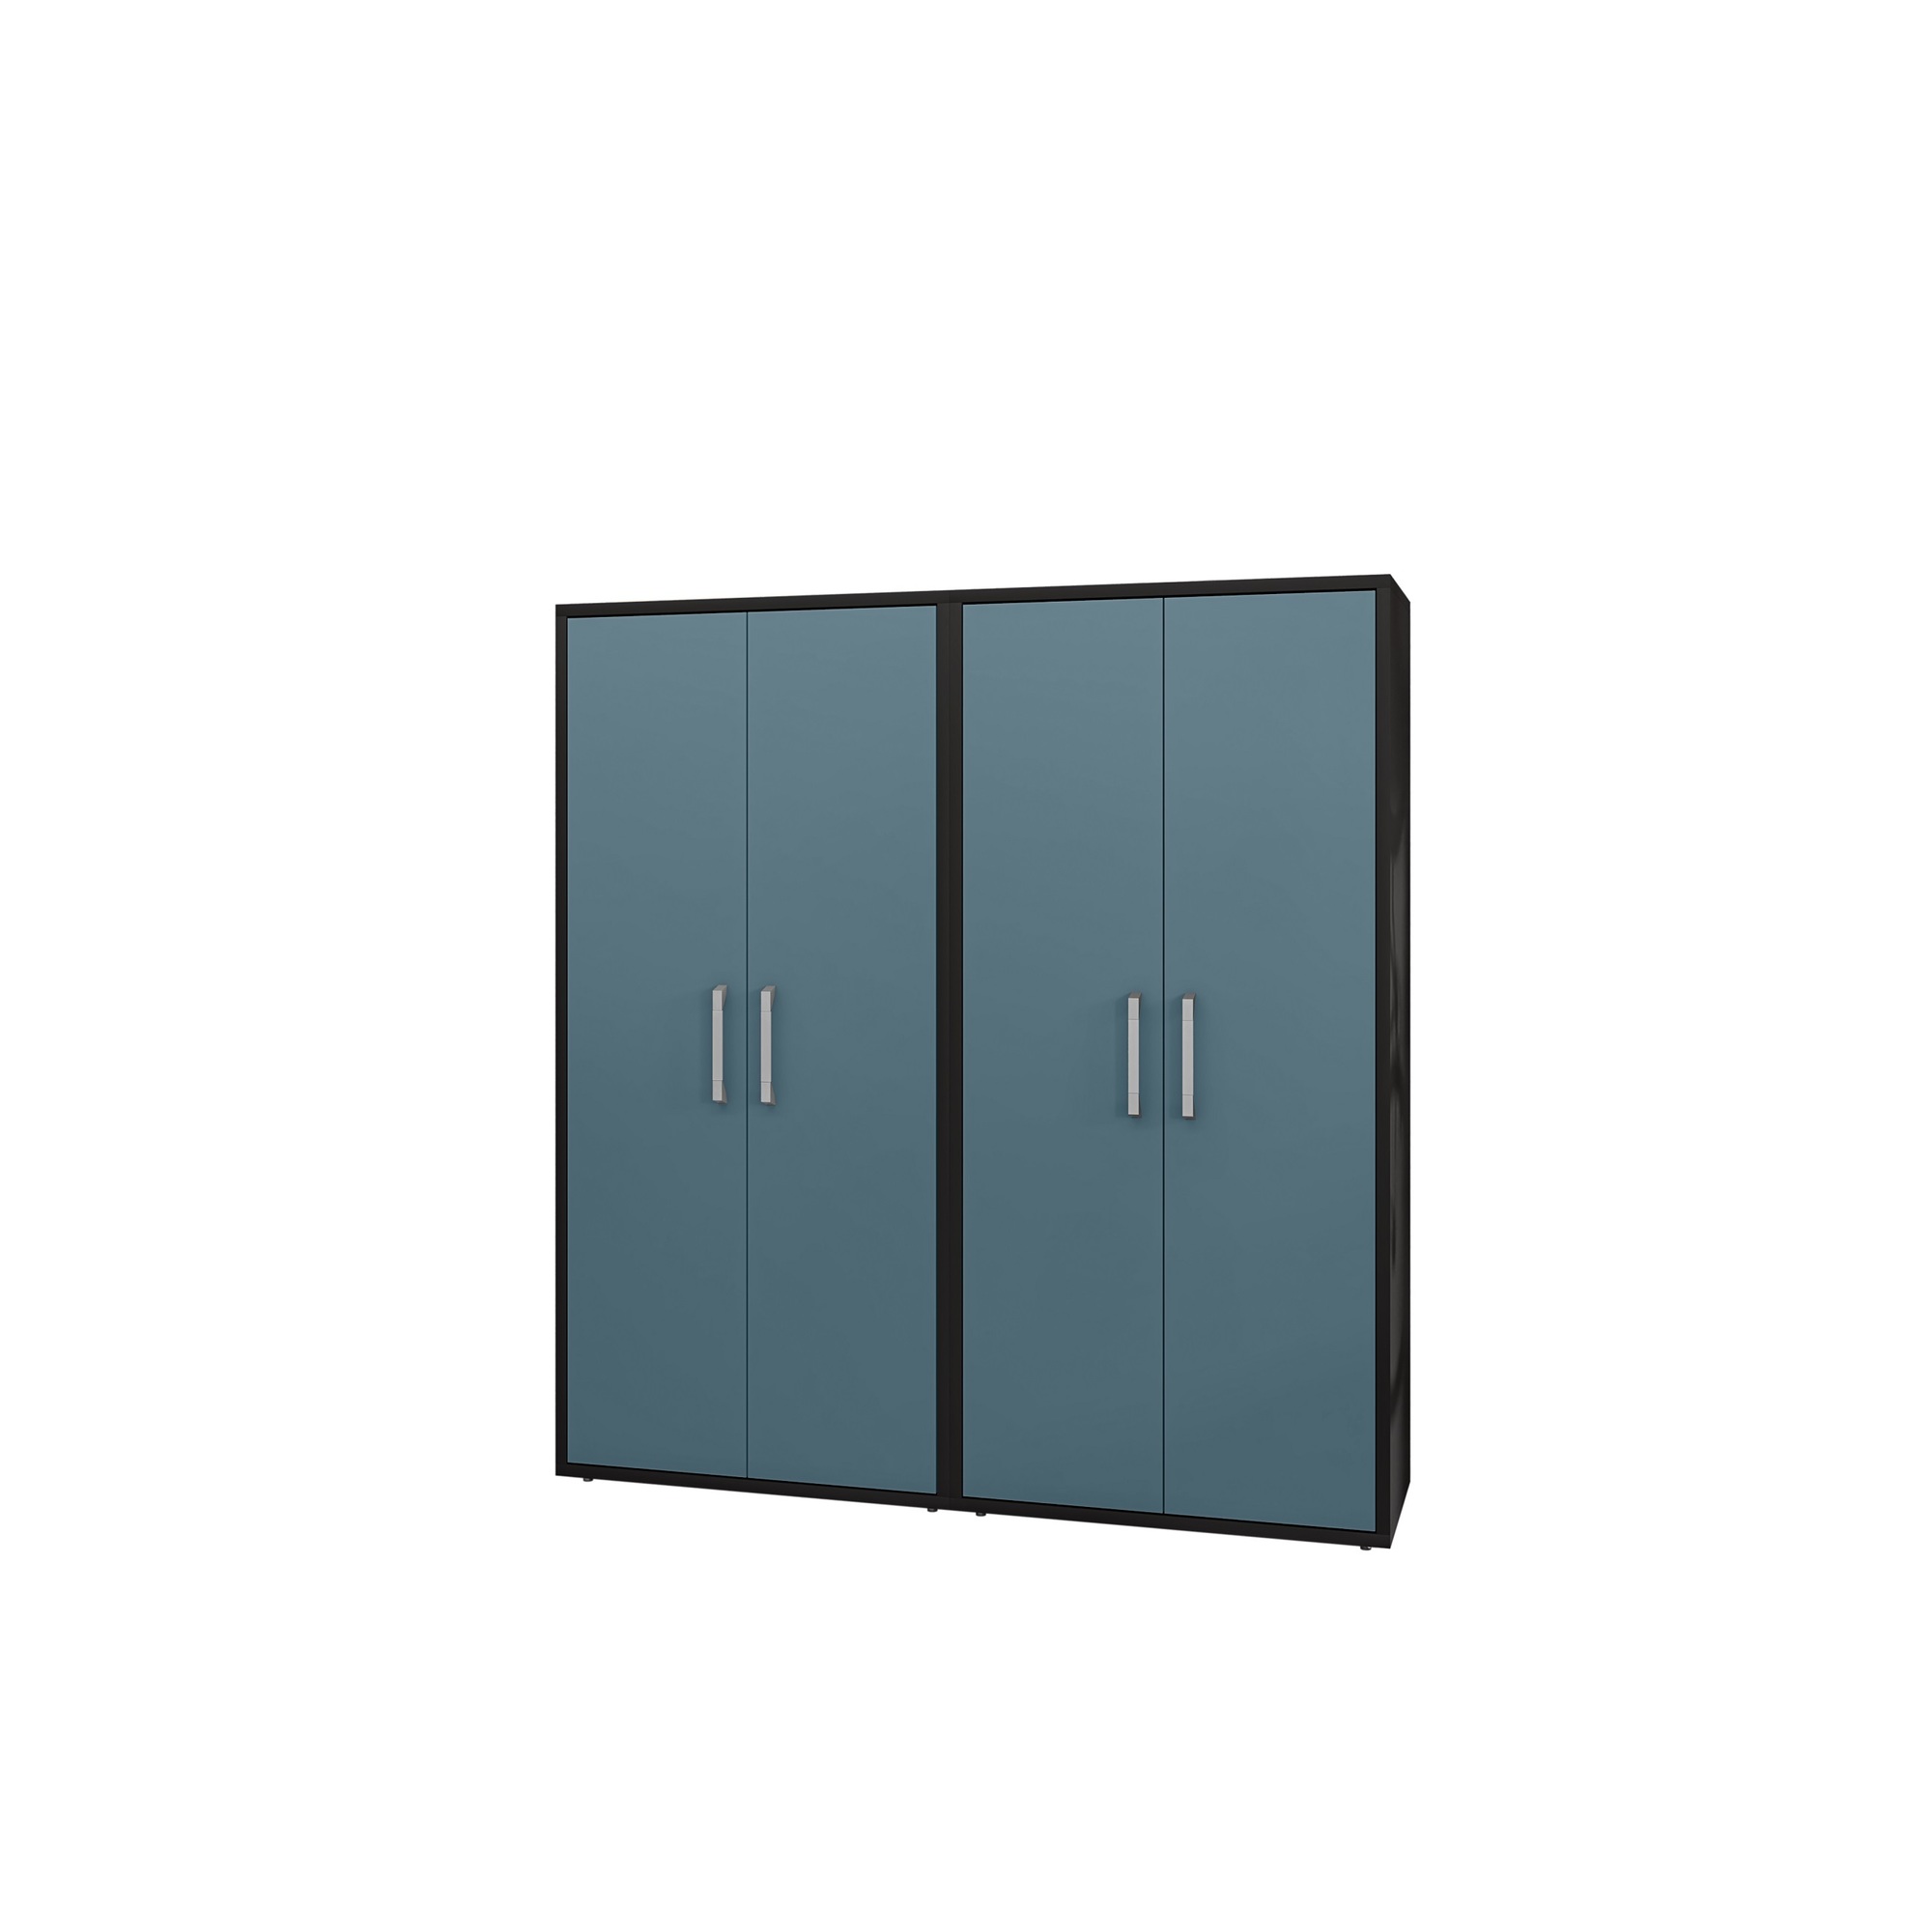 Manhattan Comfort, Eiffel Storage Cabinet in Black and Aqua, Set of 2 Height 73.43 in, Width 70.86 in, Color Blue, Model 2-250BMC